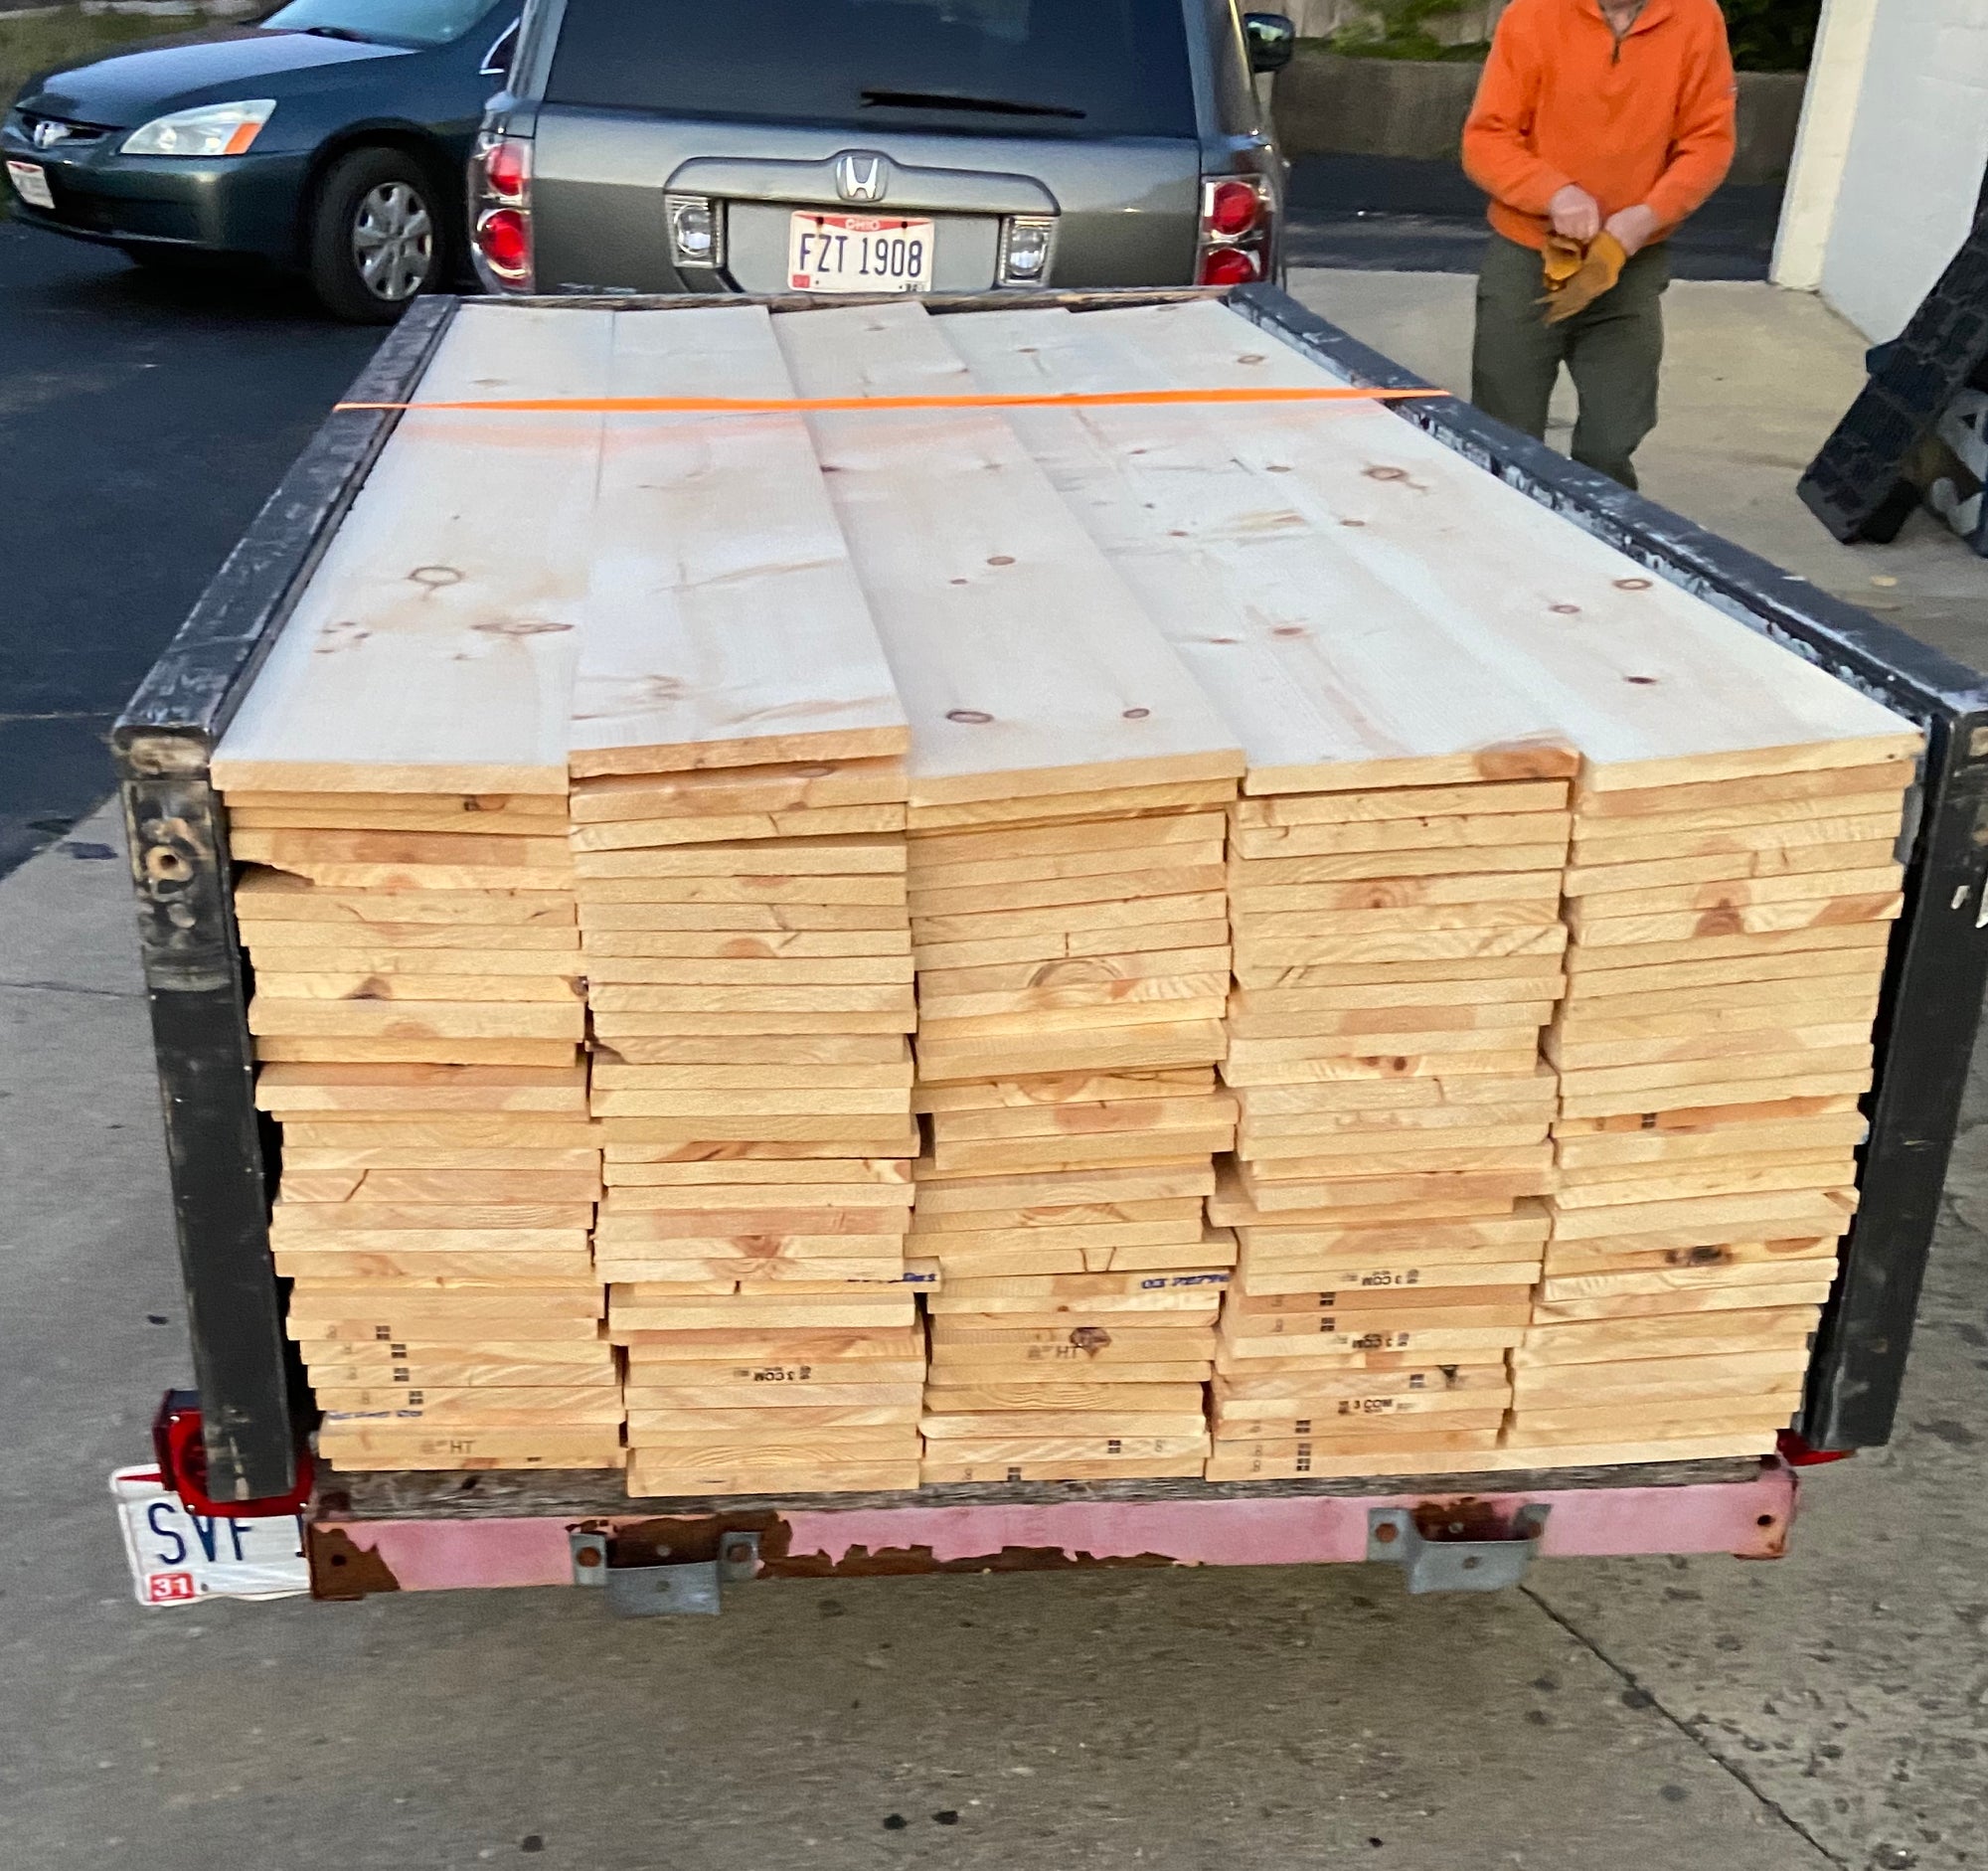 Tuesday April 21 - We got wood!